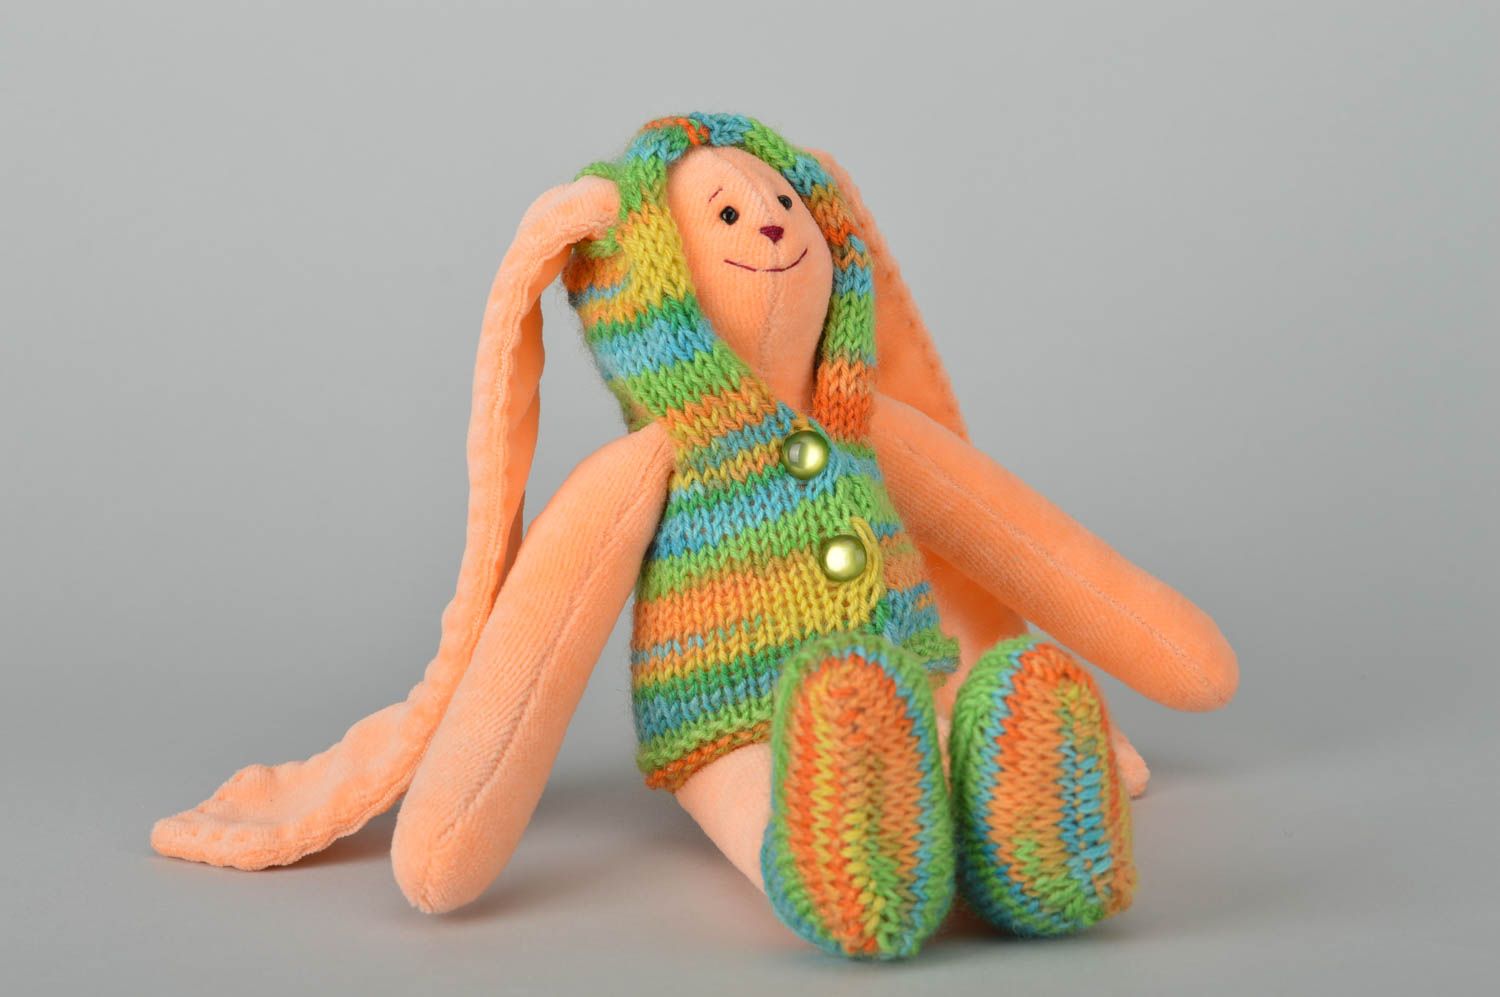 Cuddly toy handmade toy rabbit toy best gifts for children nursery decor photo 2